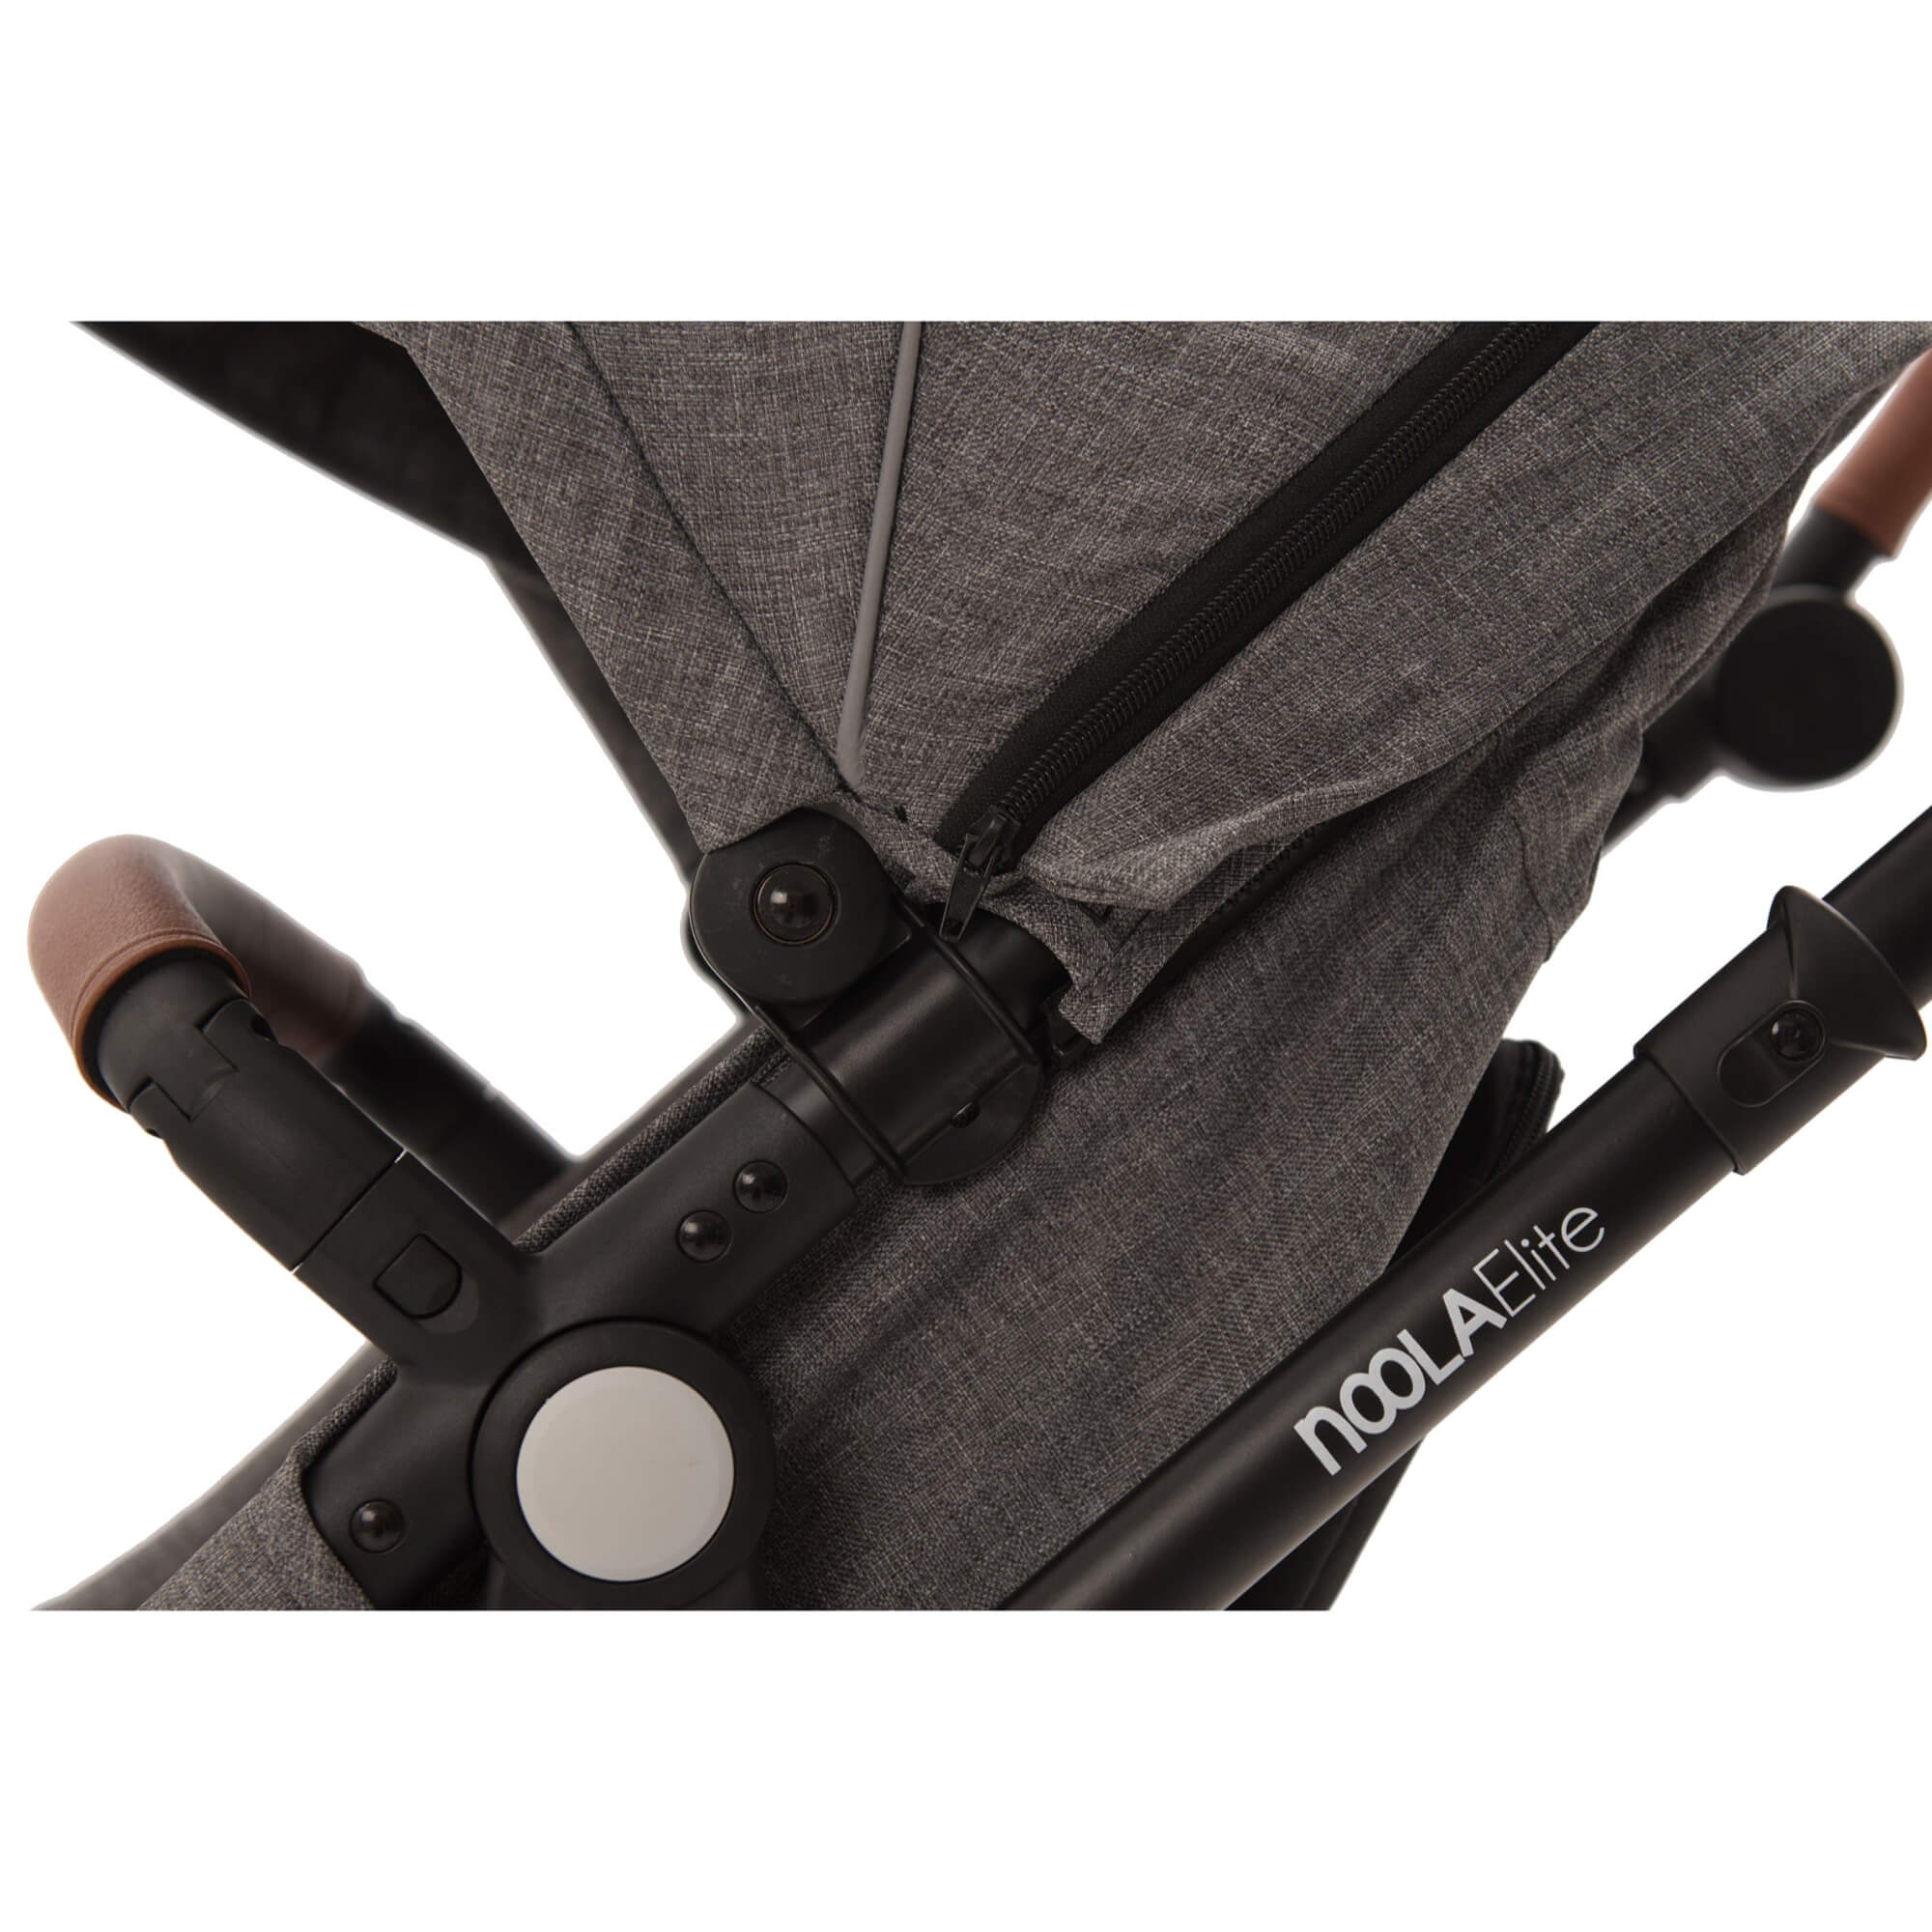 noola the elite 4in1 travel system lunar grey baby stroller